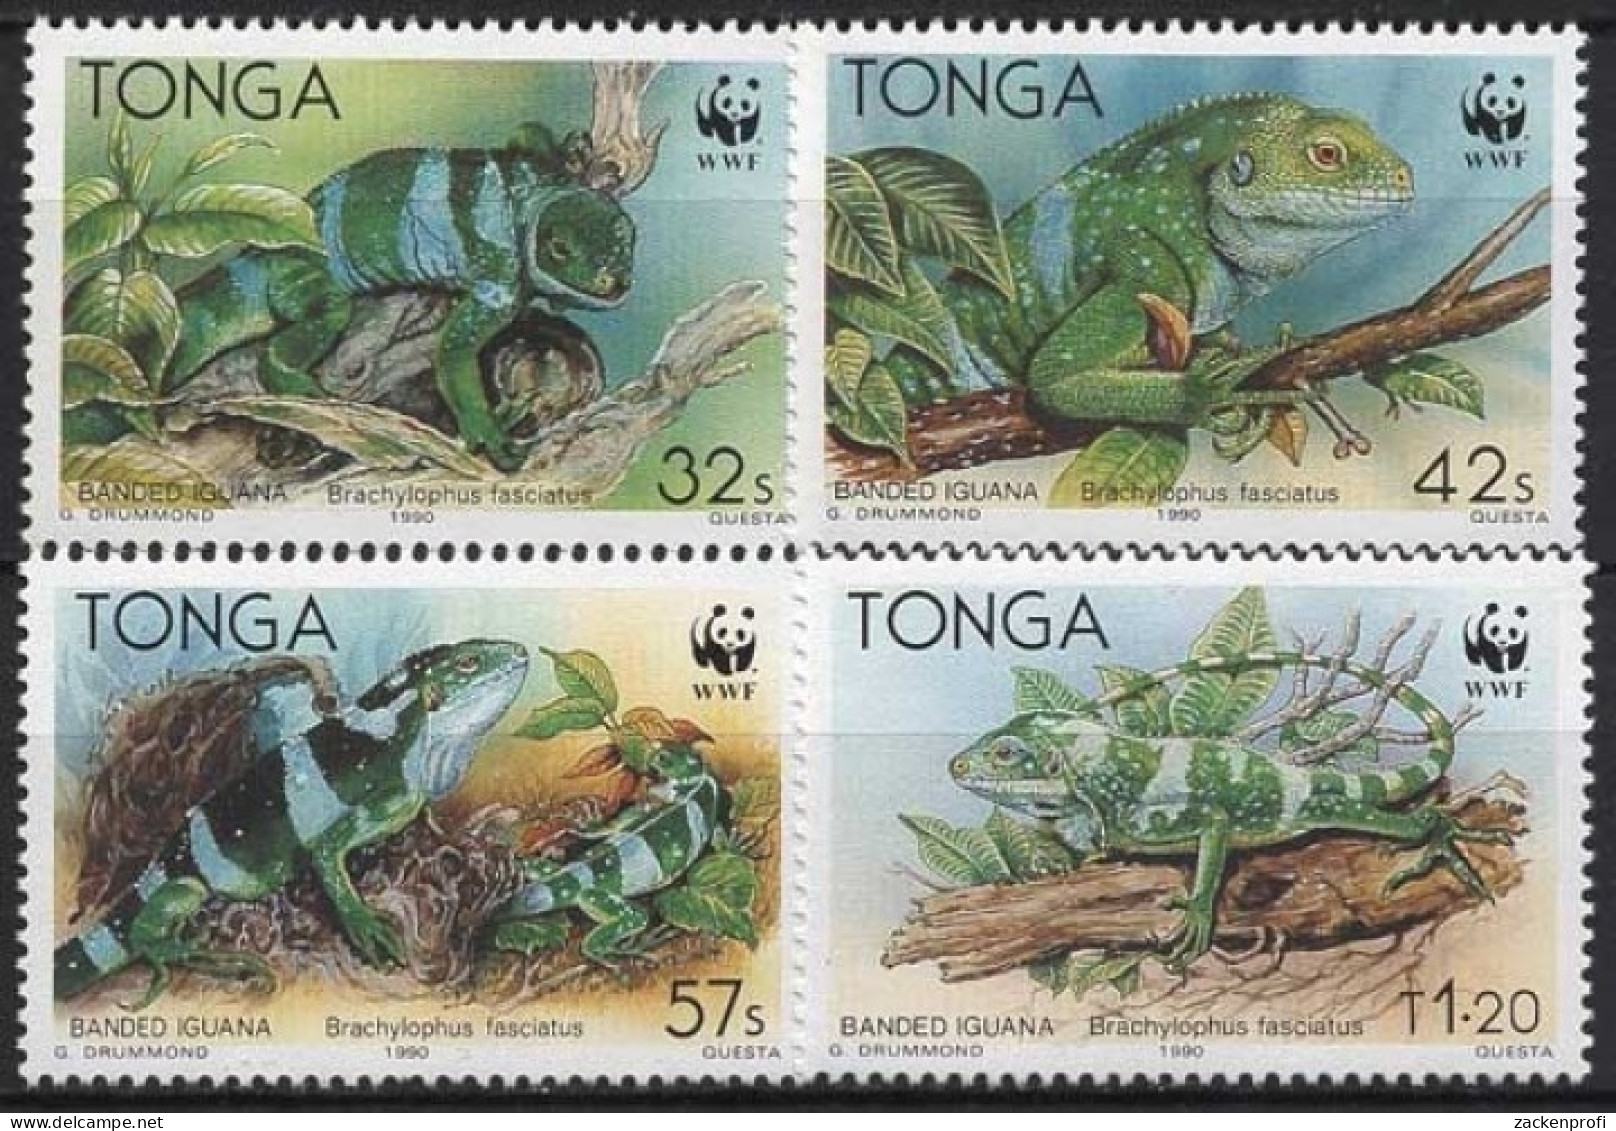 Tonga 1990 WWF Naturschutz Kurzkammleguan 1140/43 Postfrisch - Tonga (1970-...)